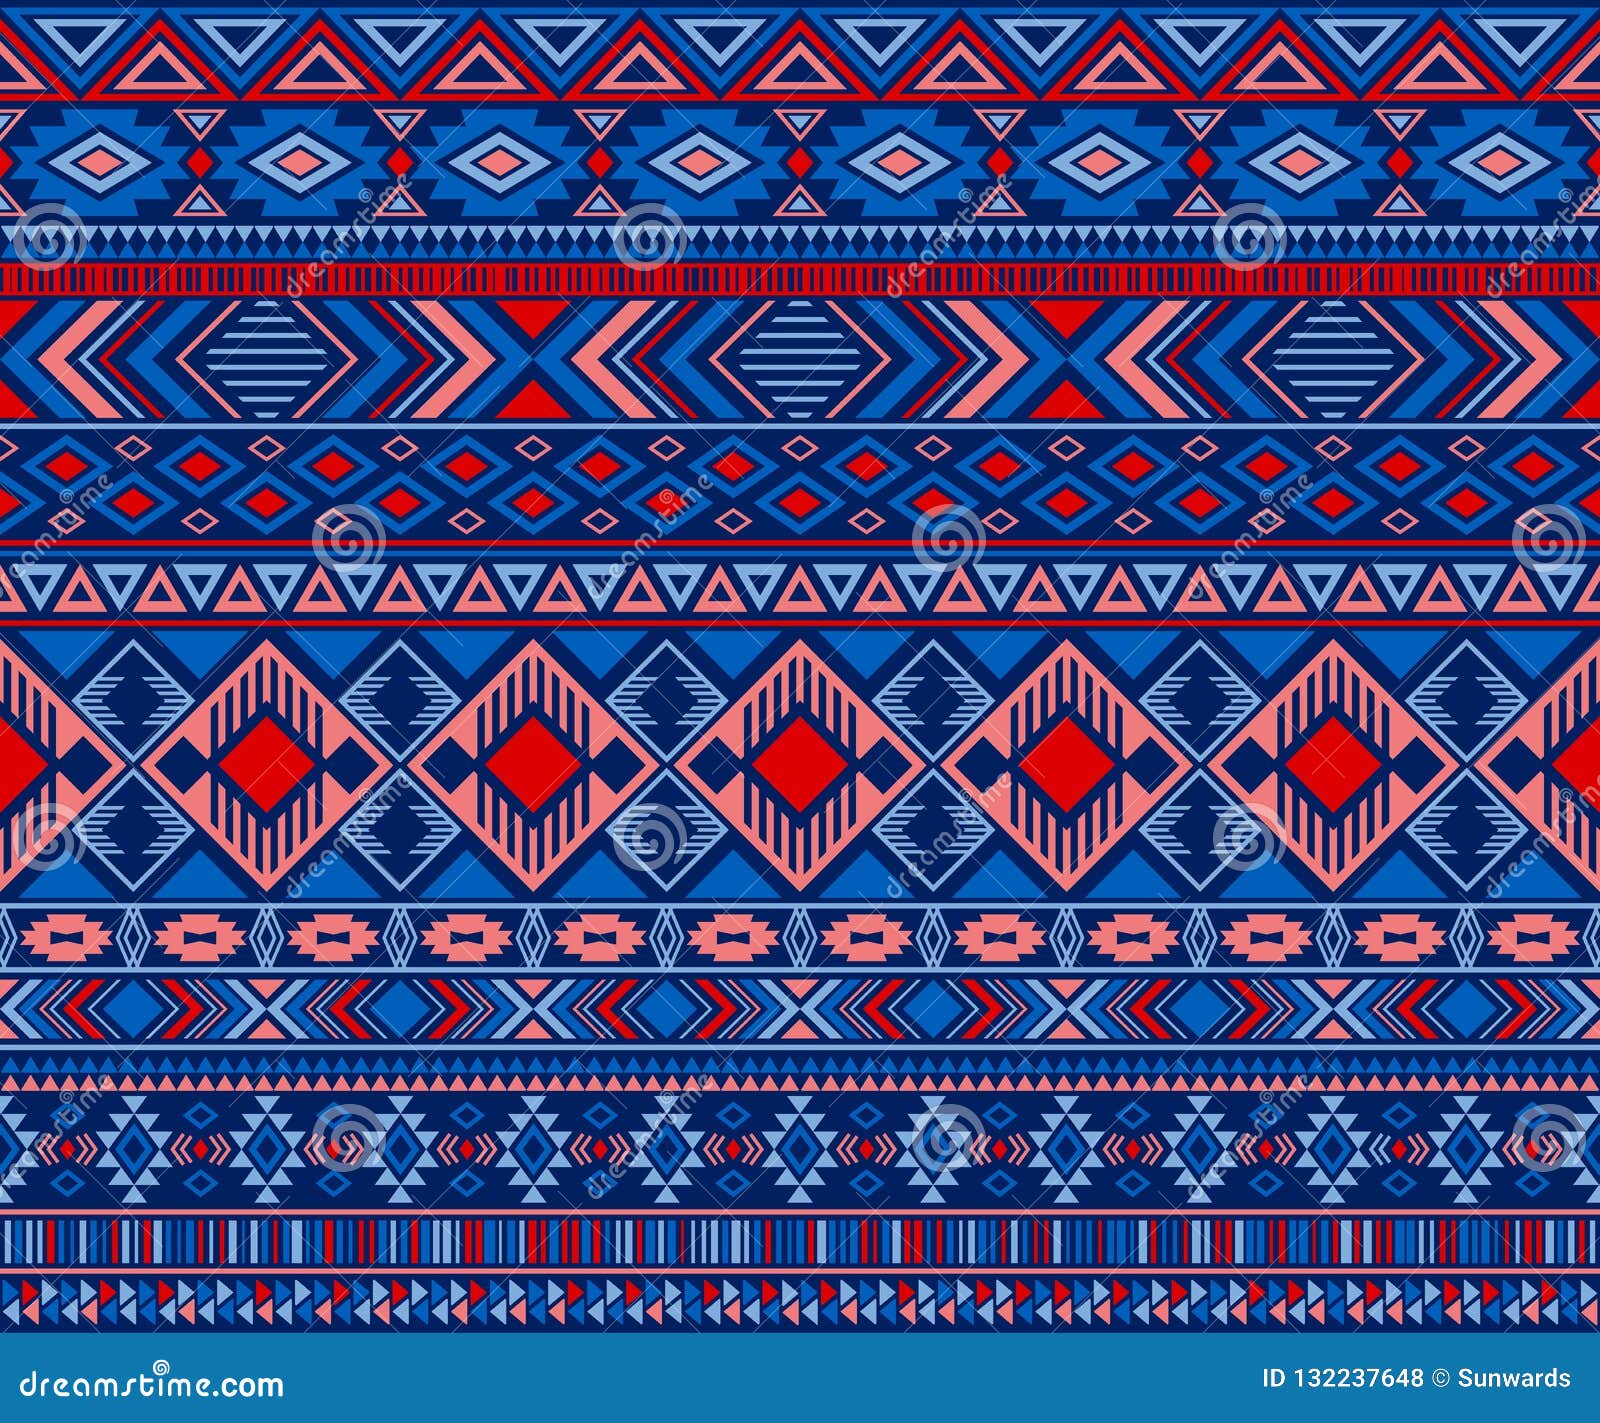 33+ Designs Native American Clothing Patterns - MarynTorsten